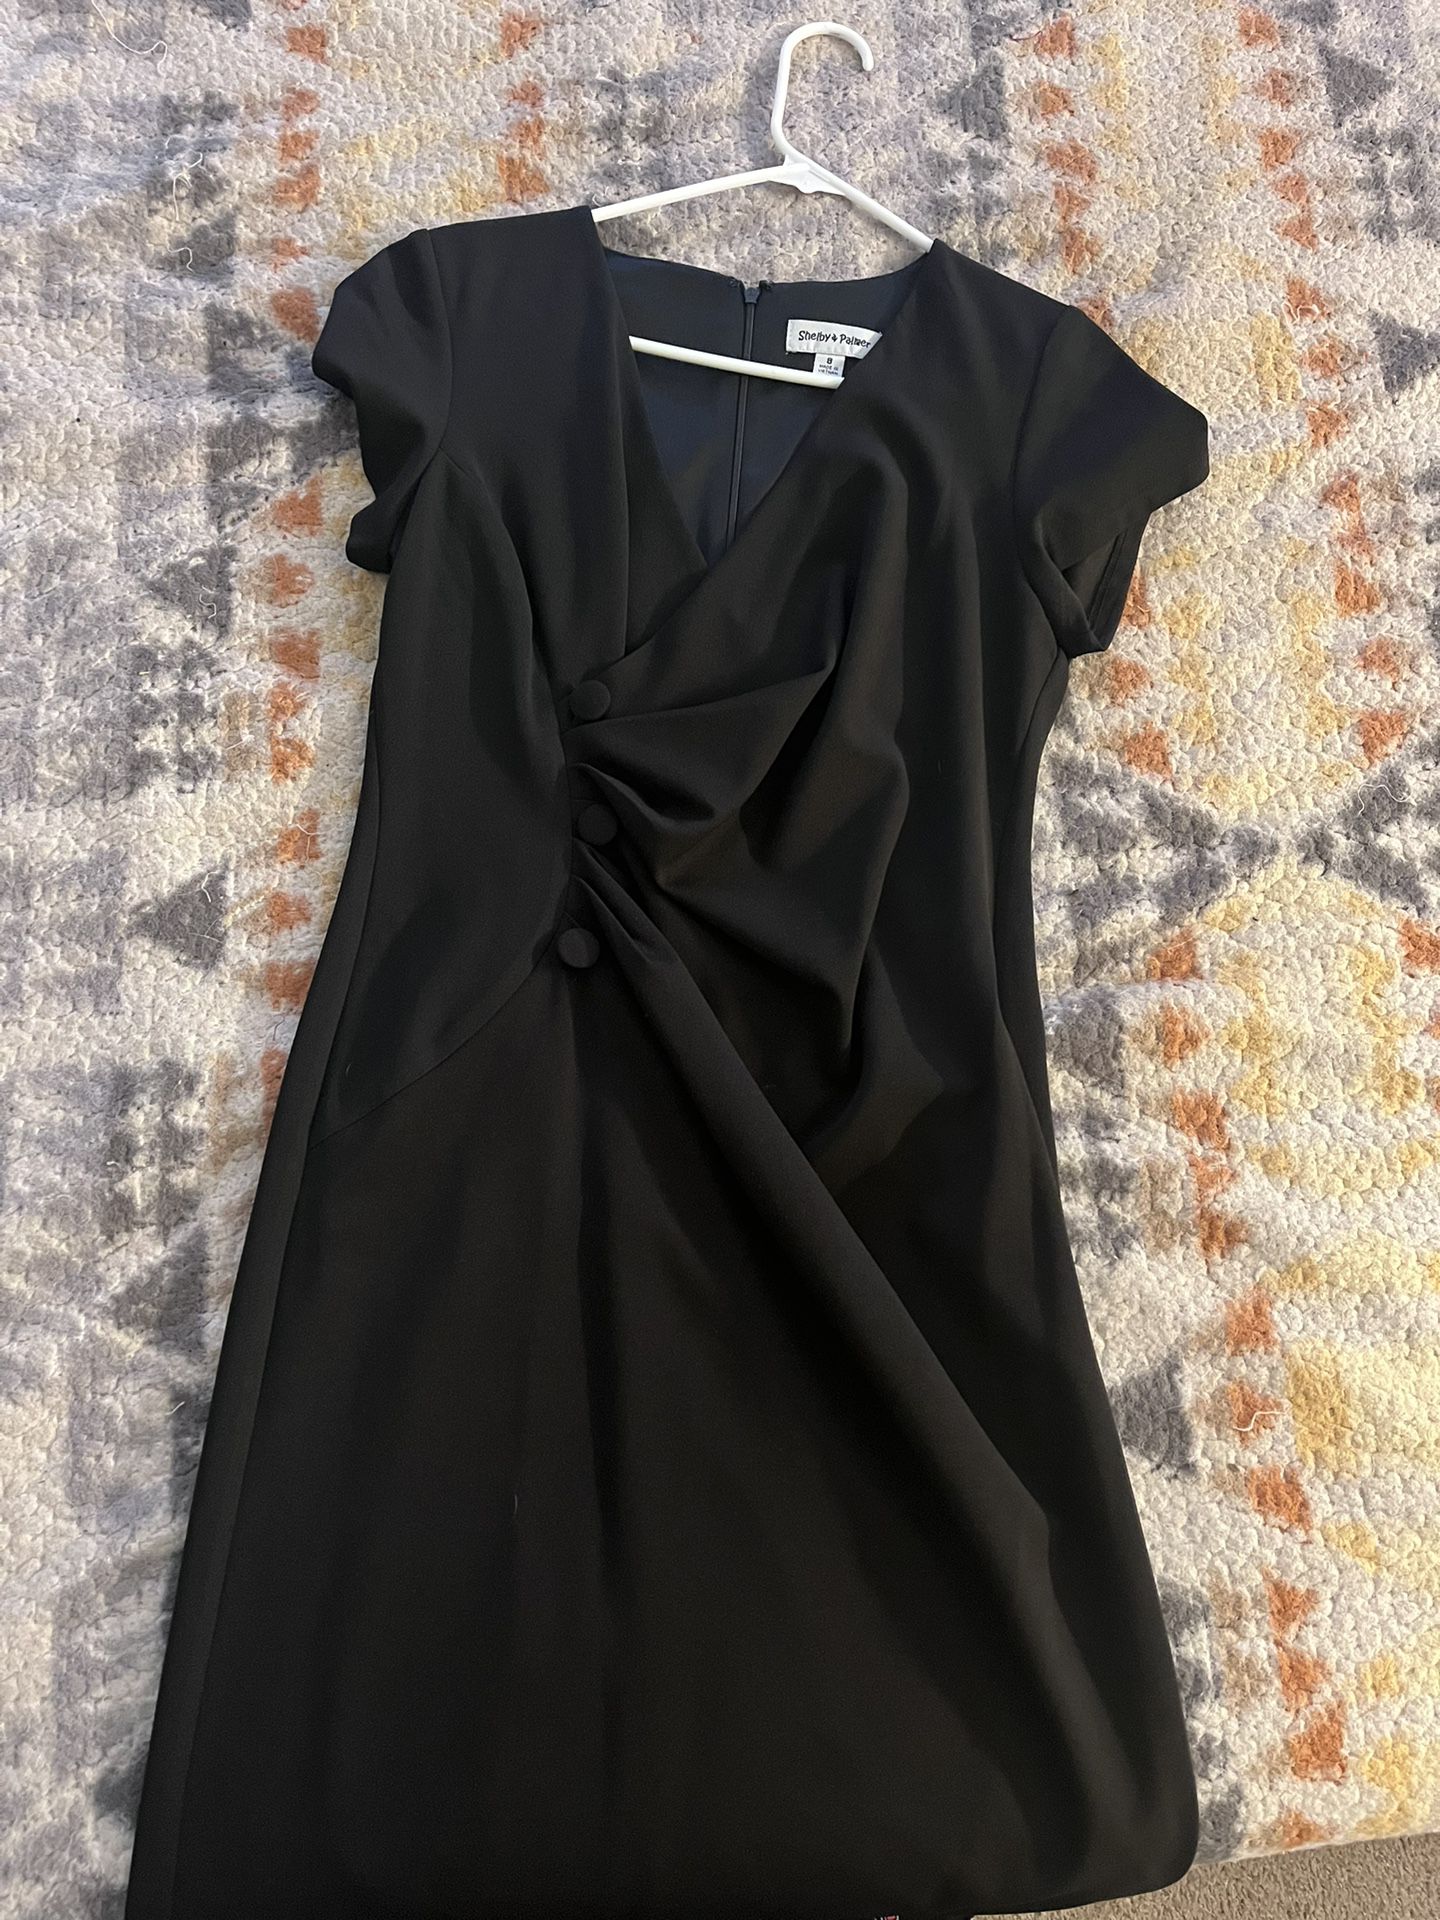 Size 8 Black Dress